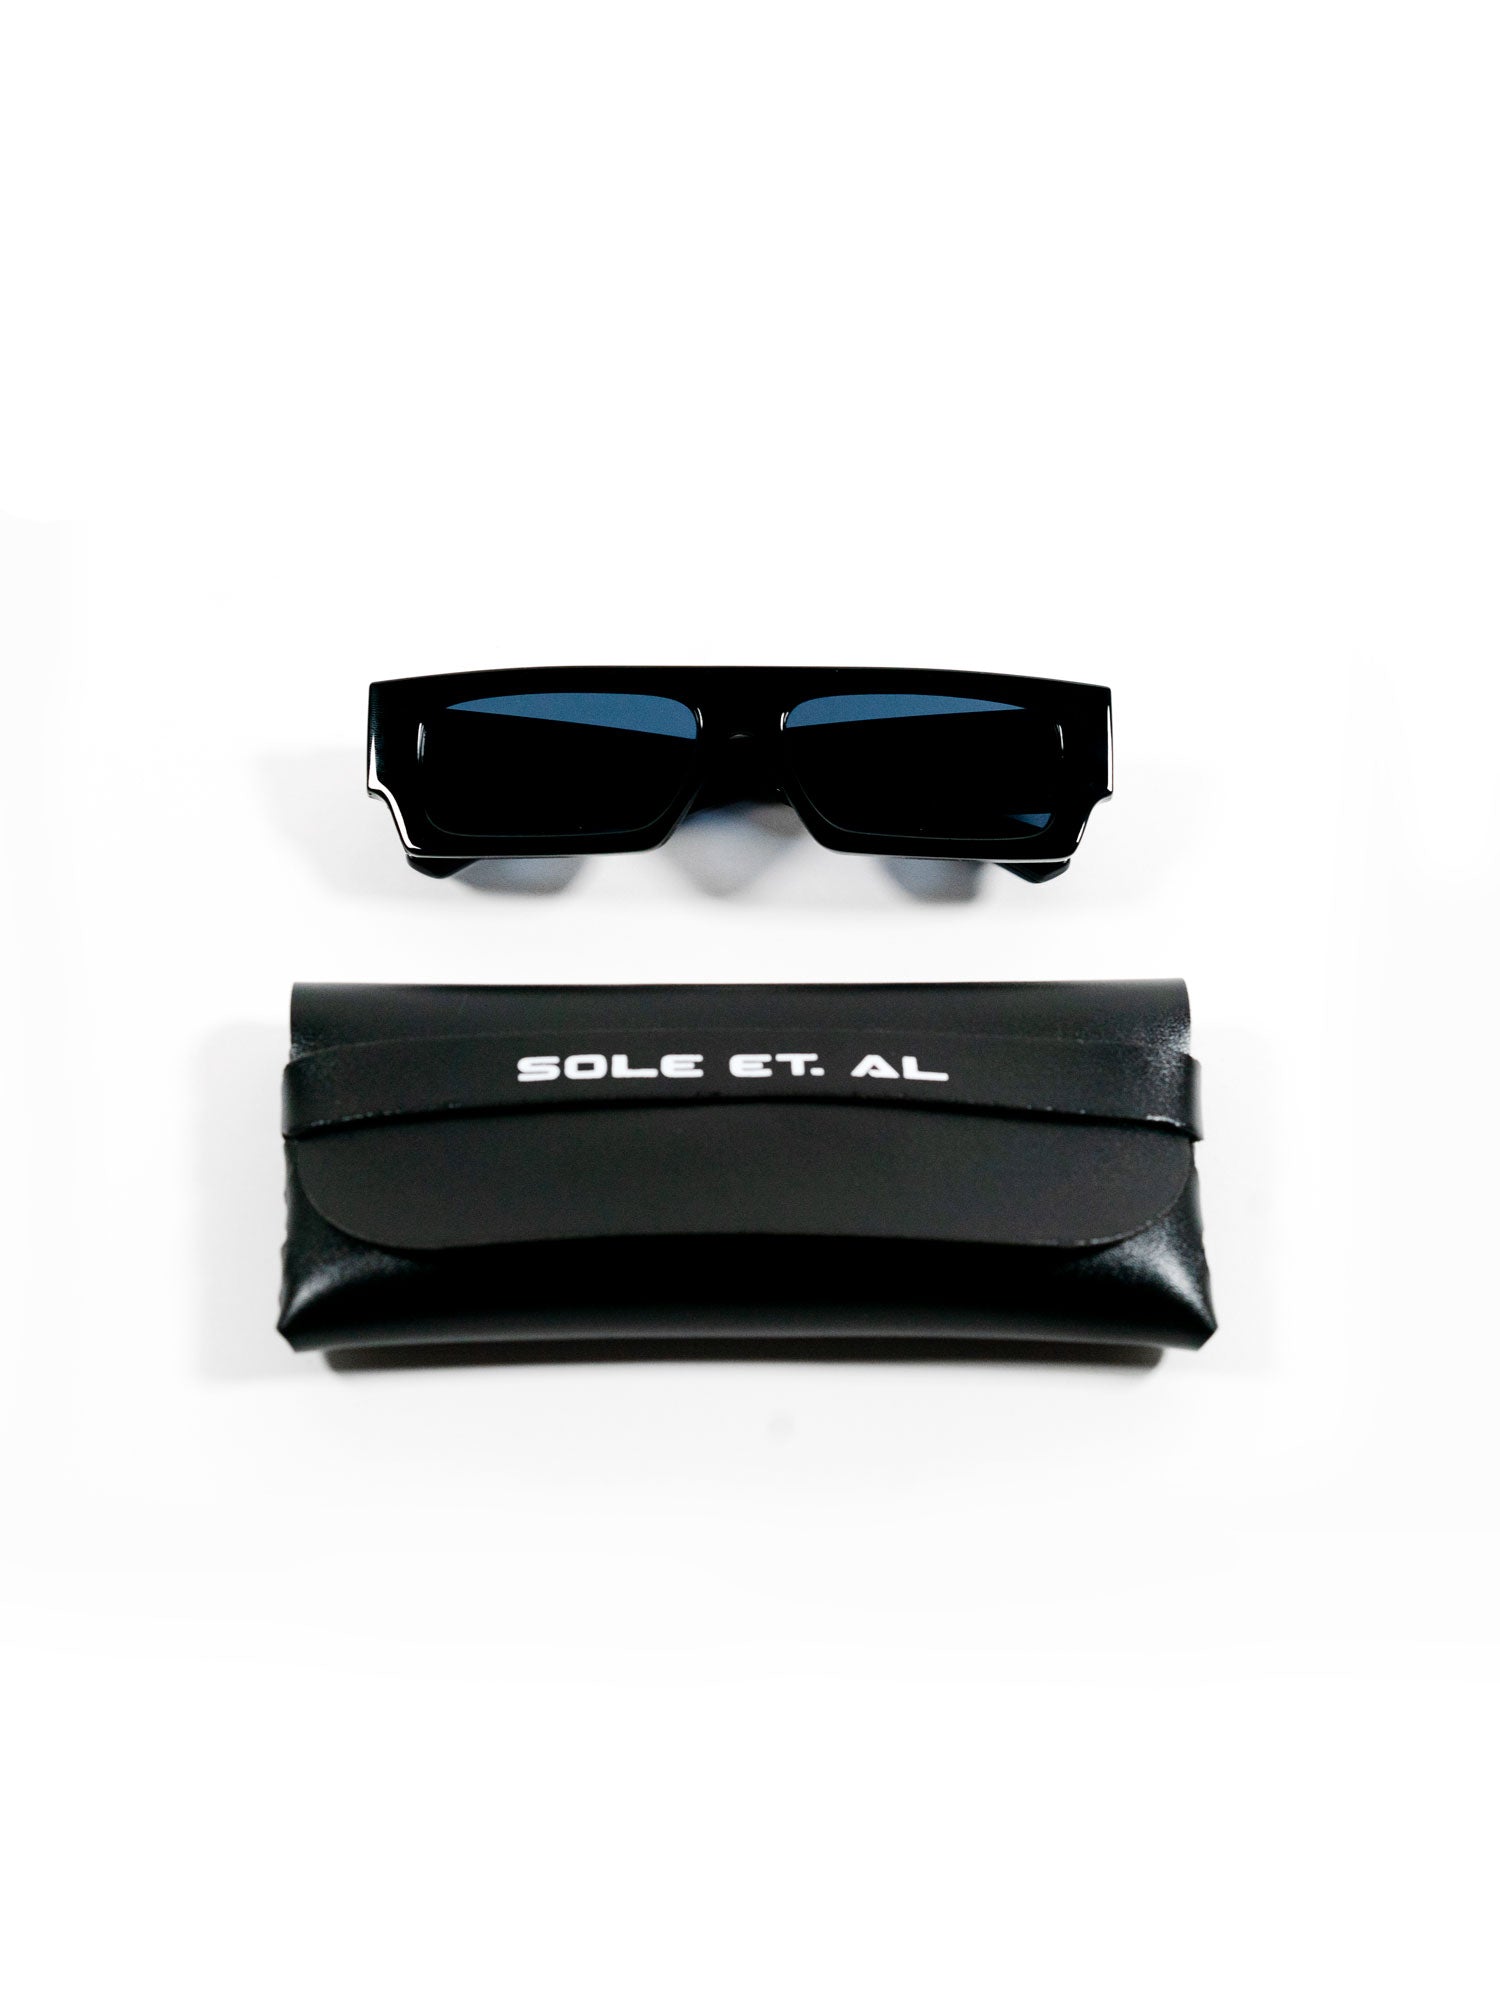 Sole et. Al Street-Blueprint solbriller